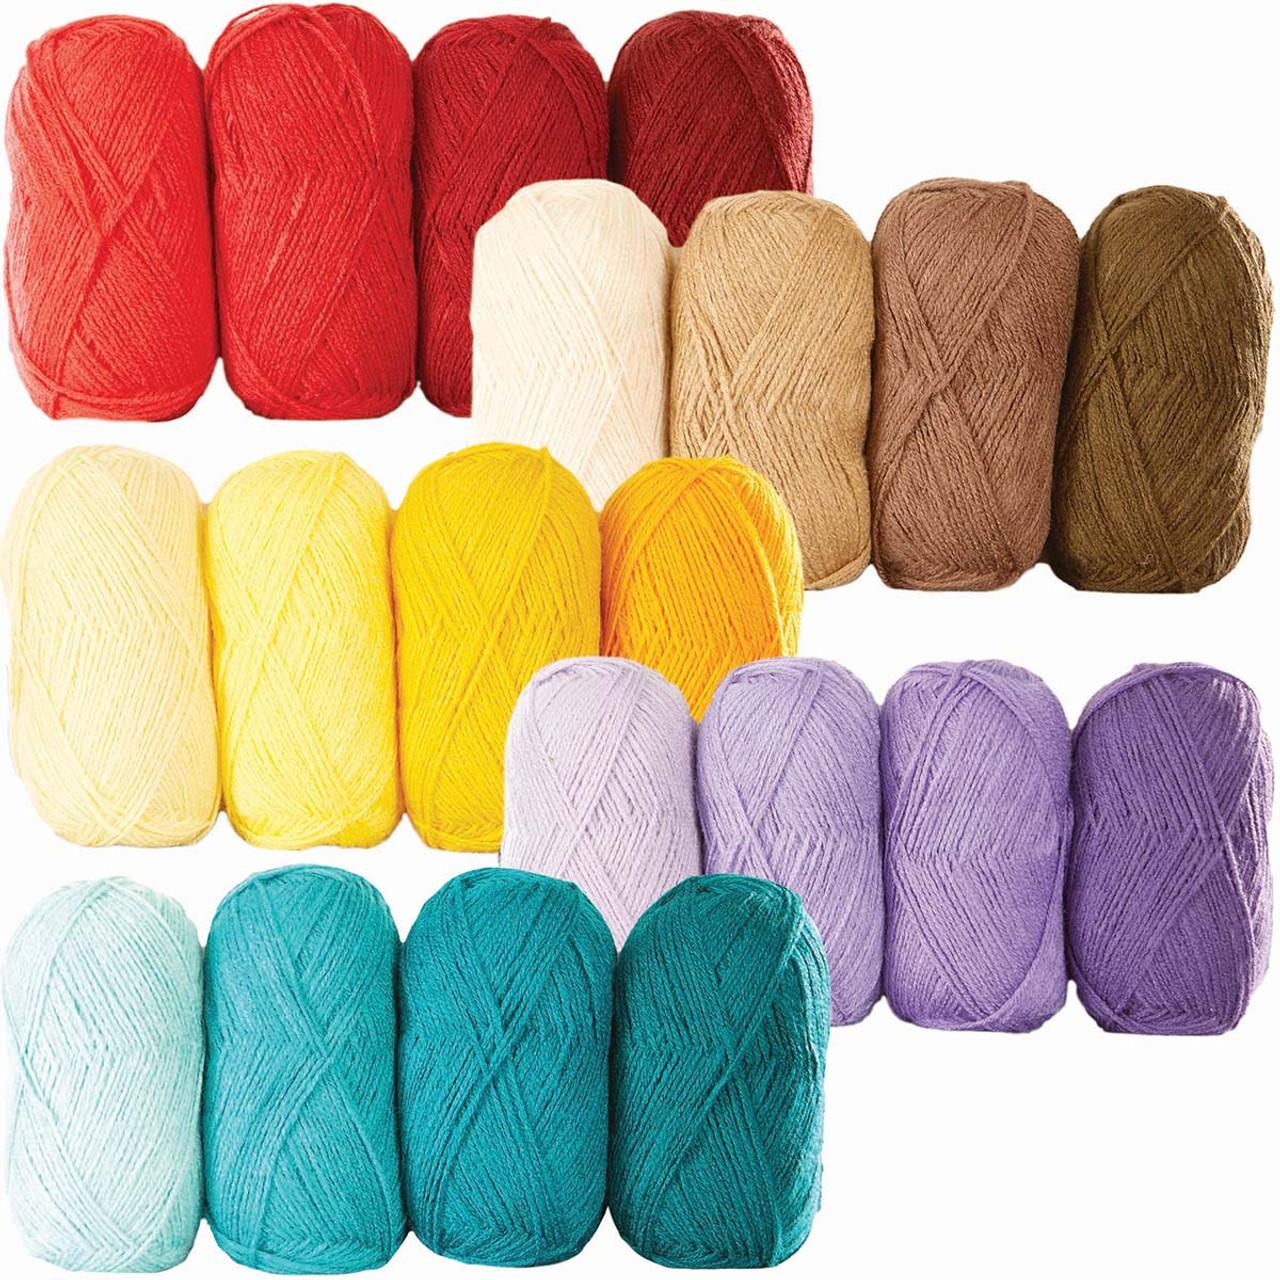 Herrschners Amigurumi Color Yarn Pack